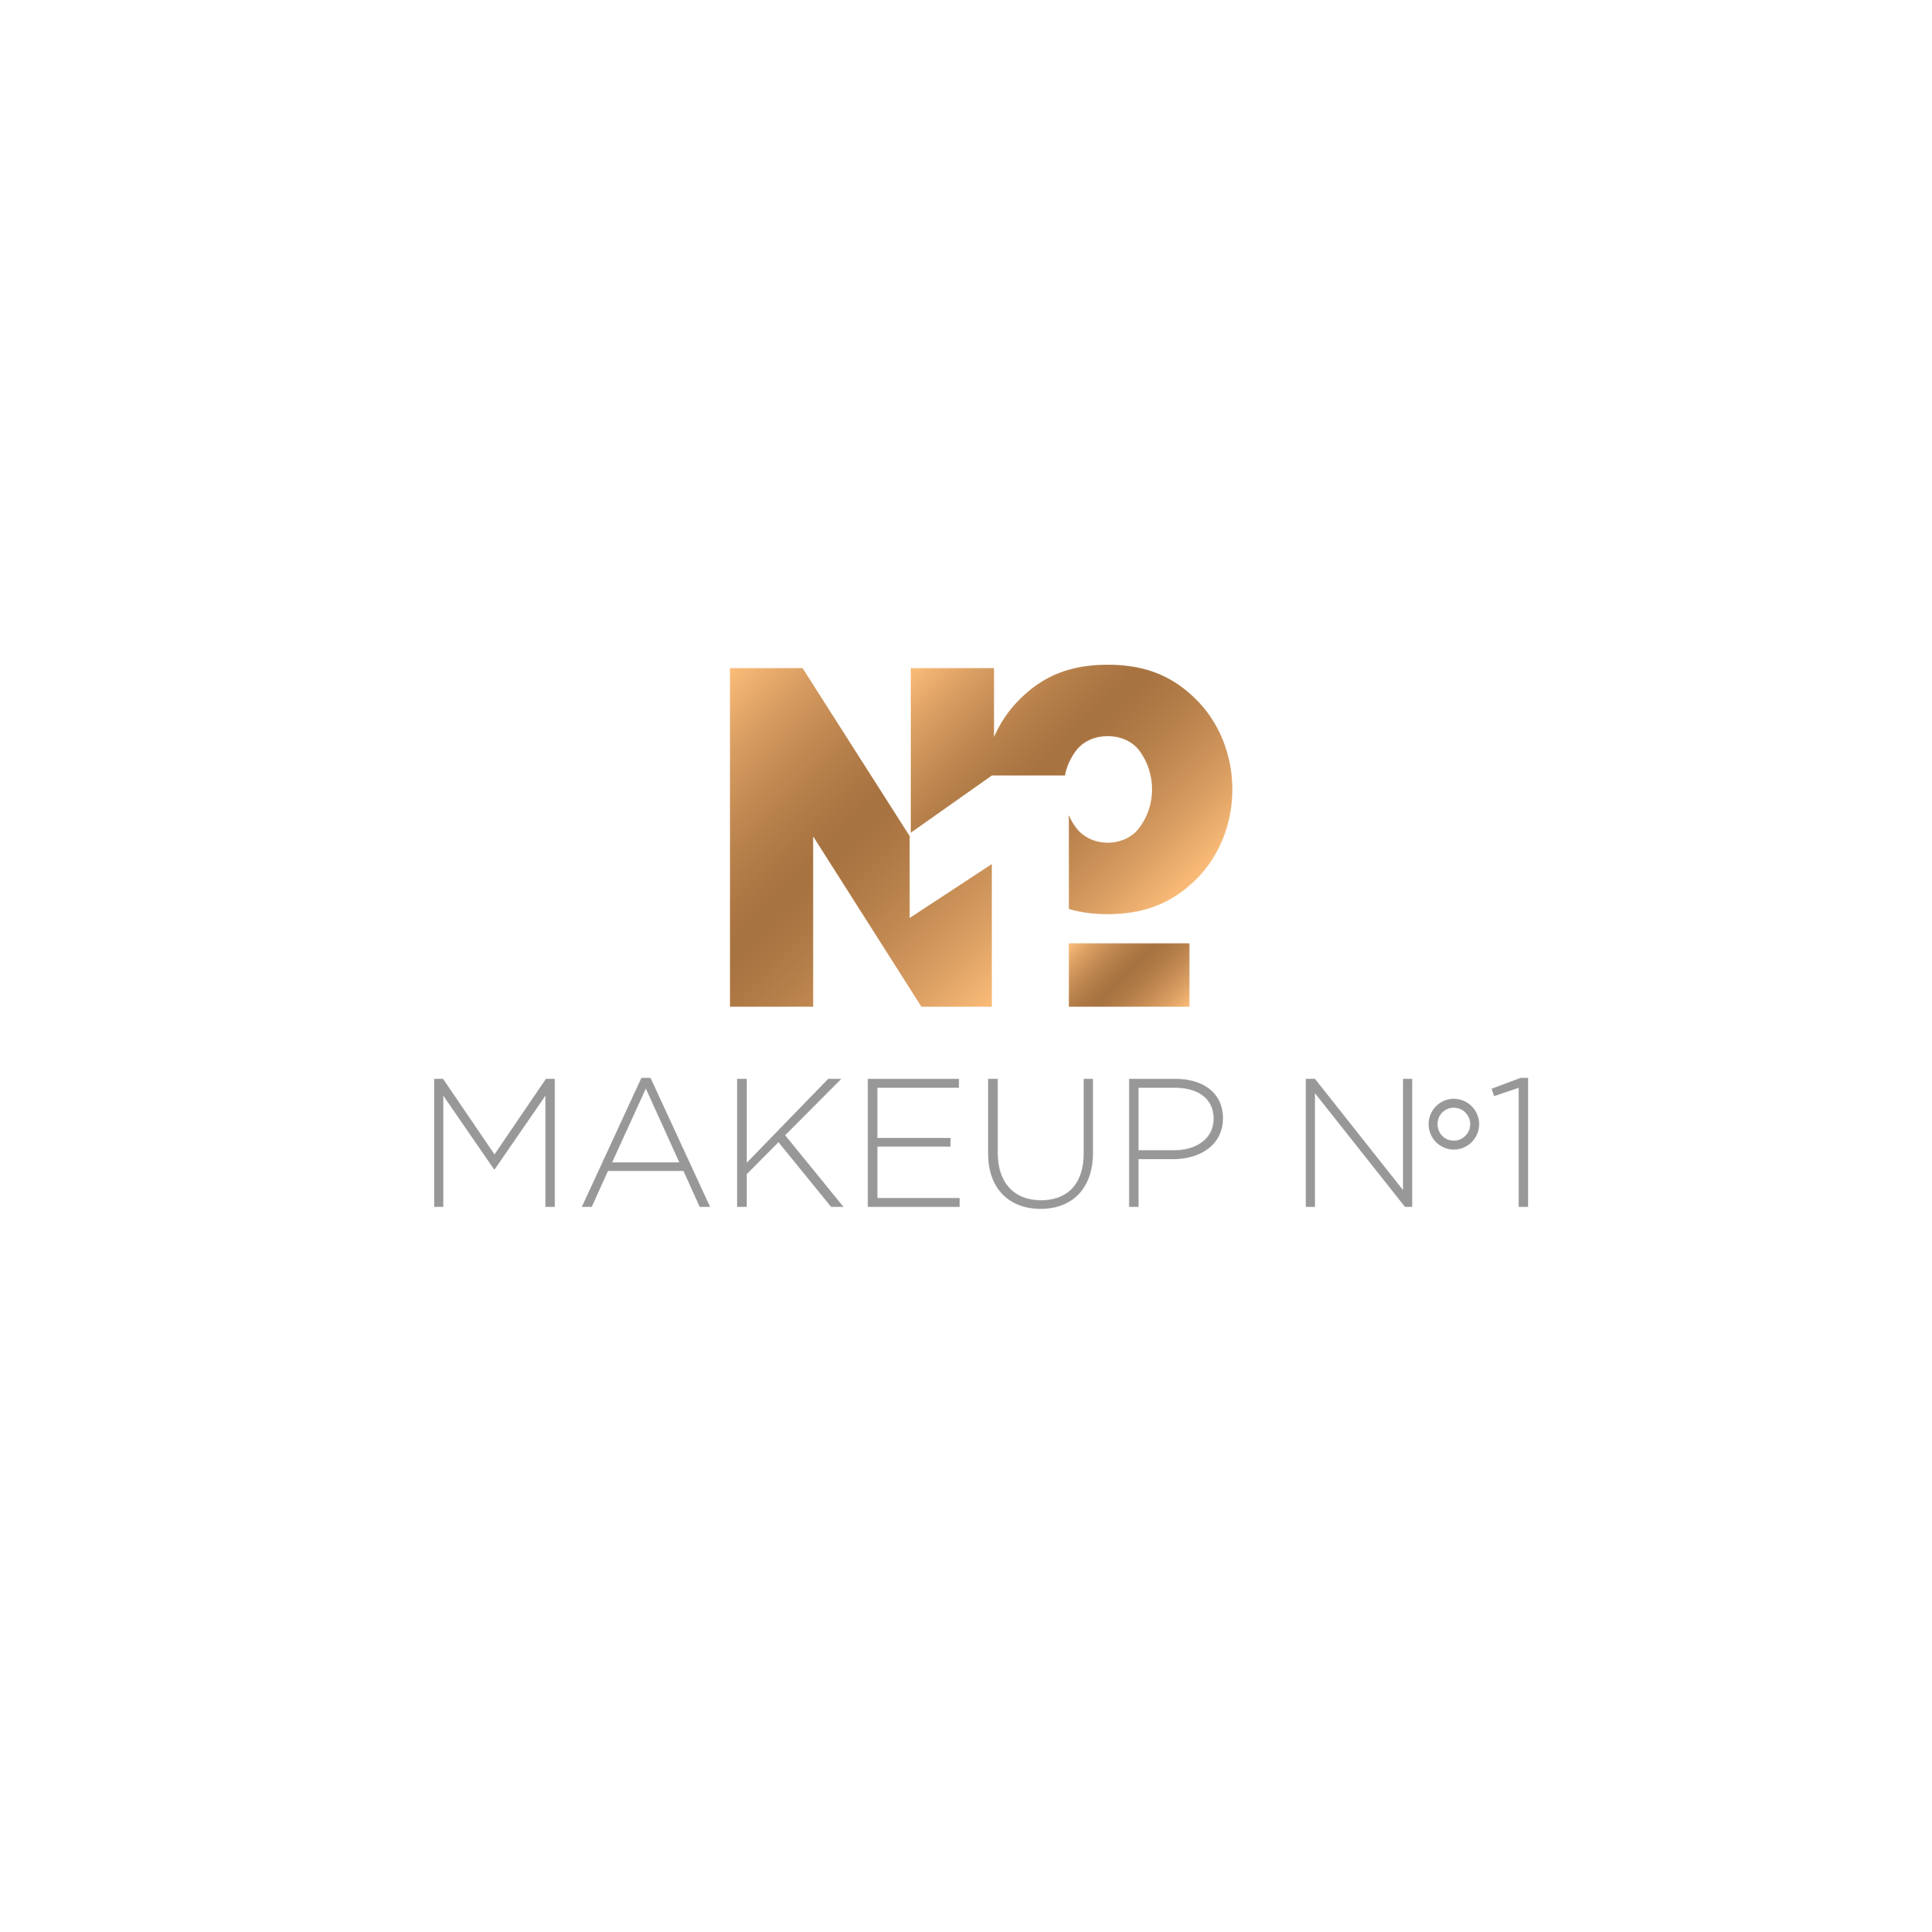 Makeup1 Logotype